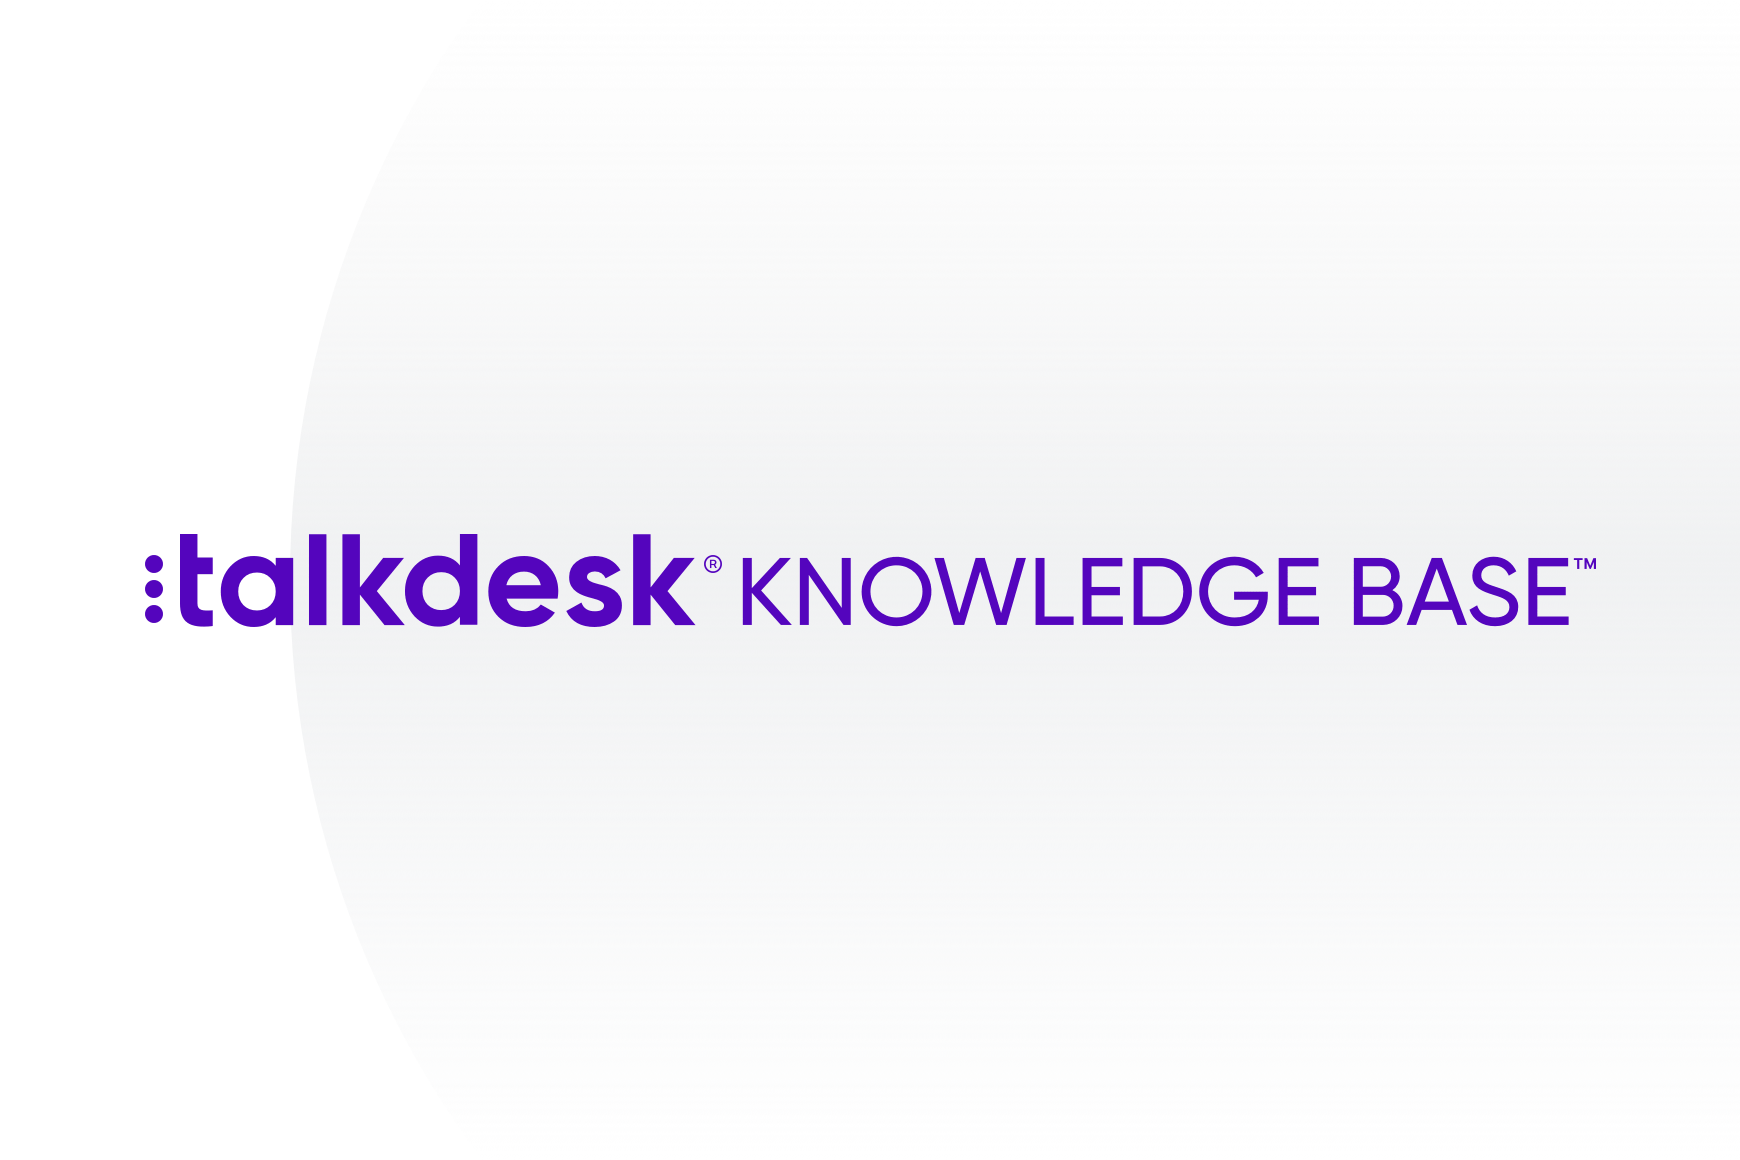 Talkdesk Knowledge Base Documentation